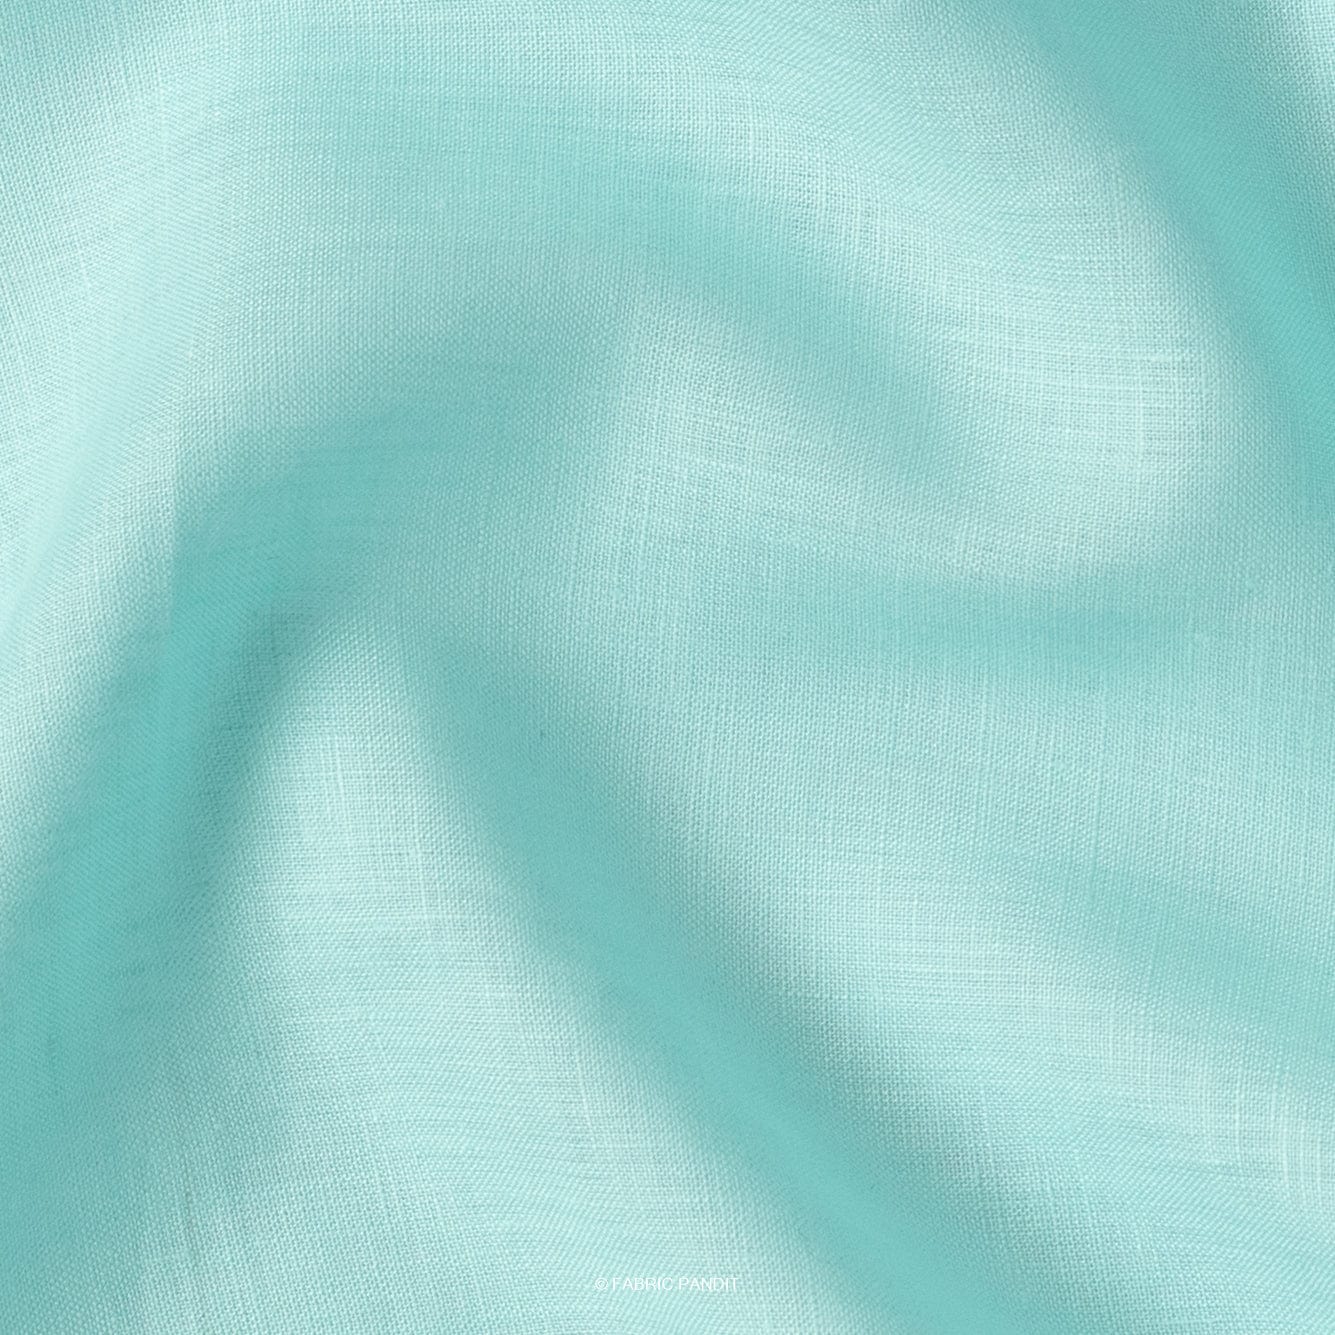 Fabric Pandit Fabric Pale Turquoise Plain Premium 60 Lea Pure Linen Fabric (Width 58 inch)